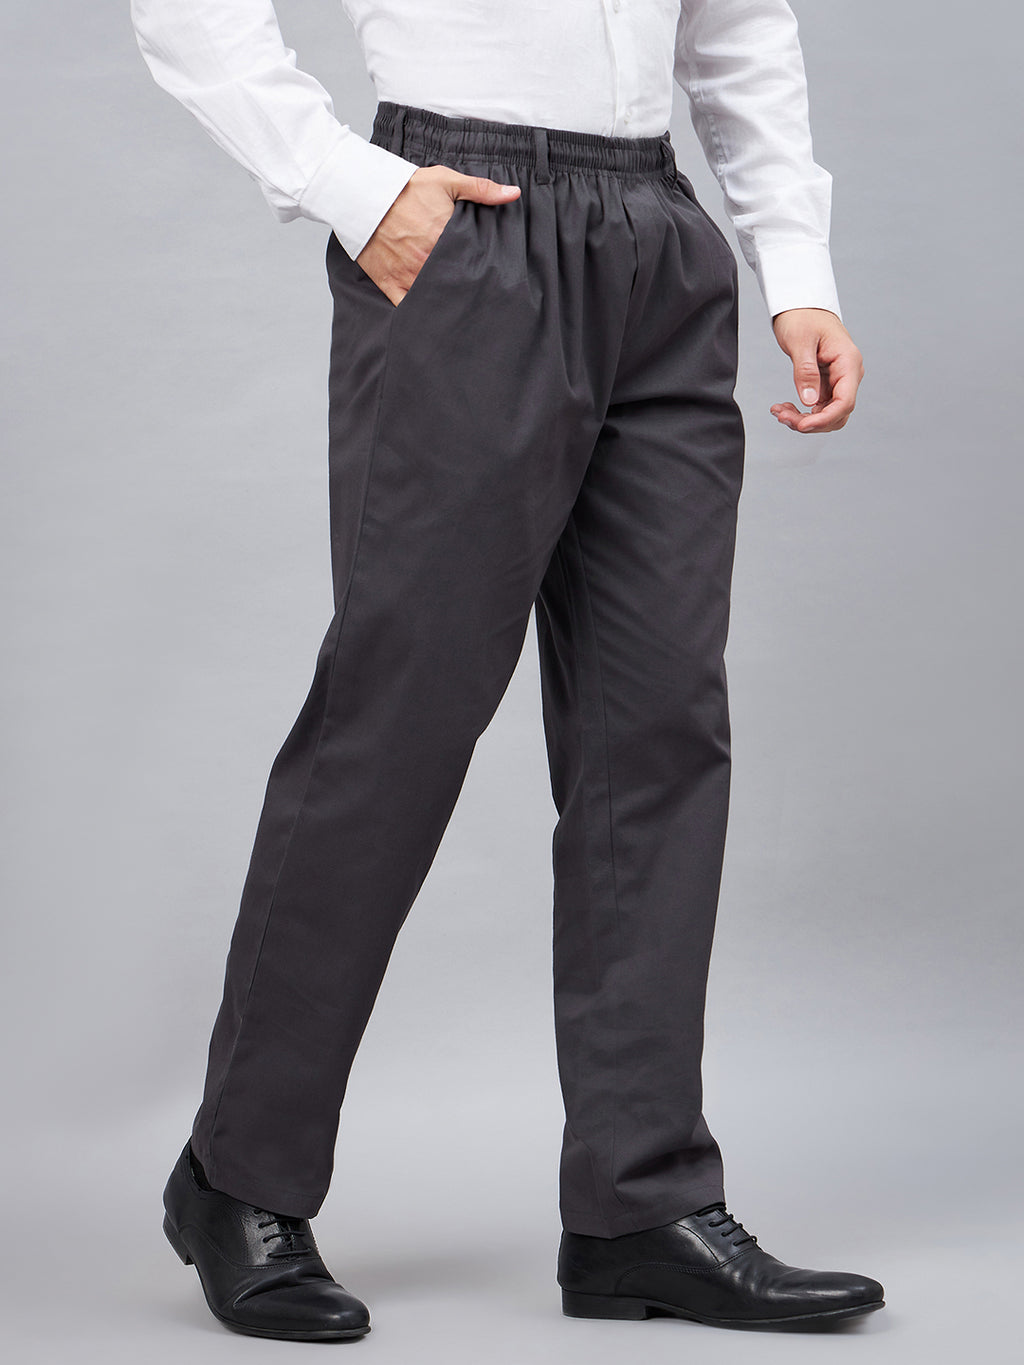 Spring Autumn Suit Pants Men Slim Work Elastic Waist Formal Trousers Plus  Size  eBay